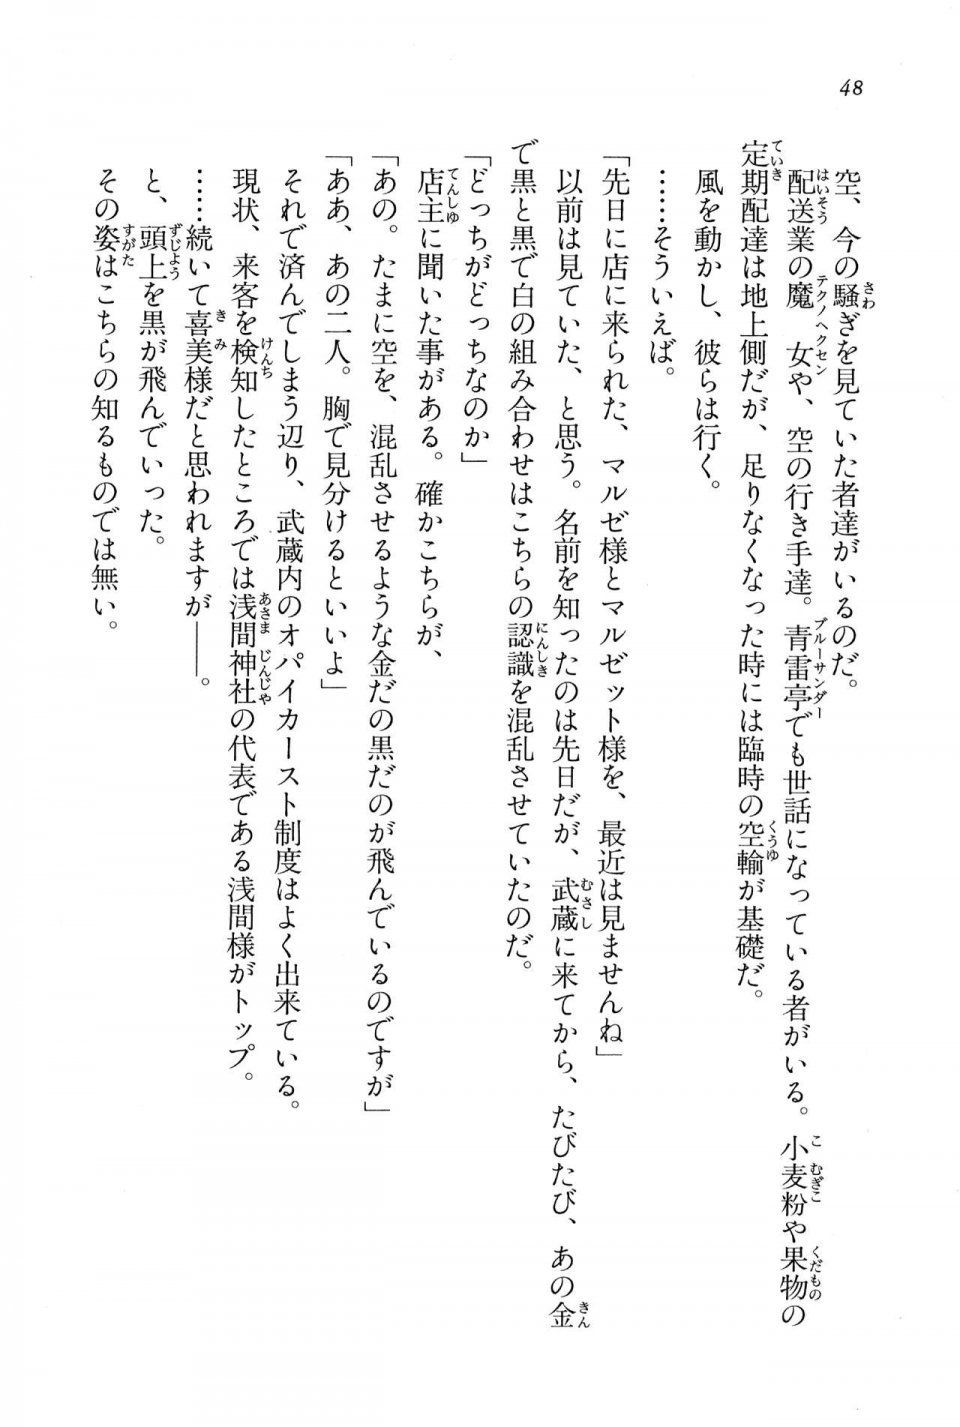 Kyoukai Senjou no Horizon BD Special Mininovel Vol 7(4A) - Photo #52